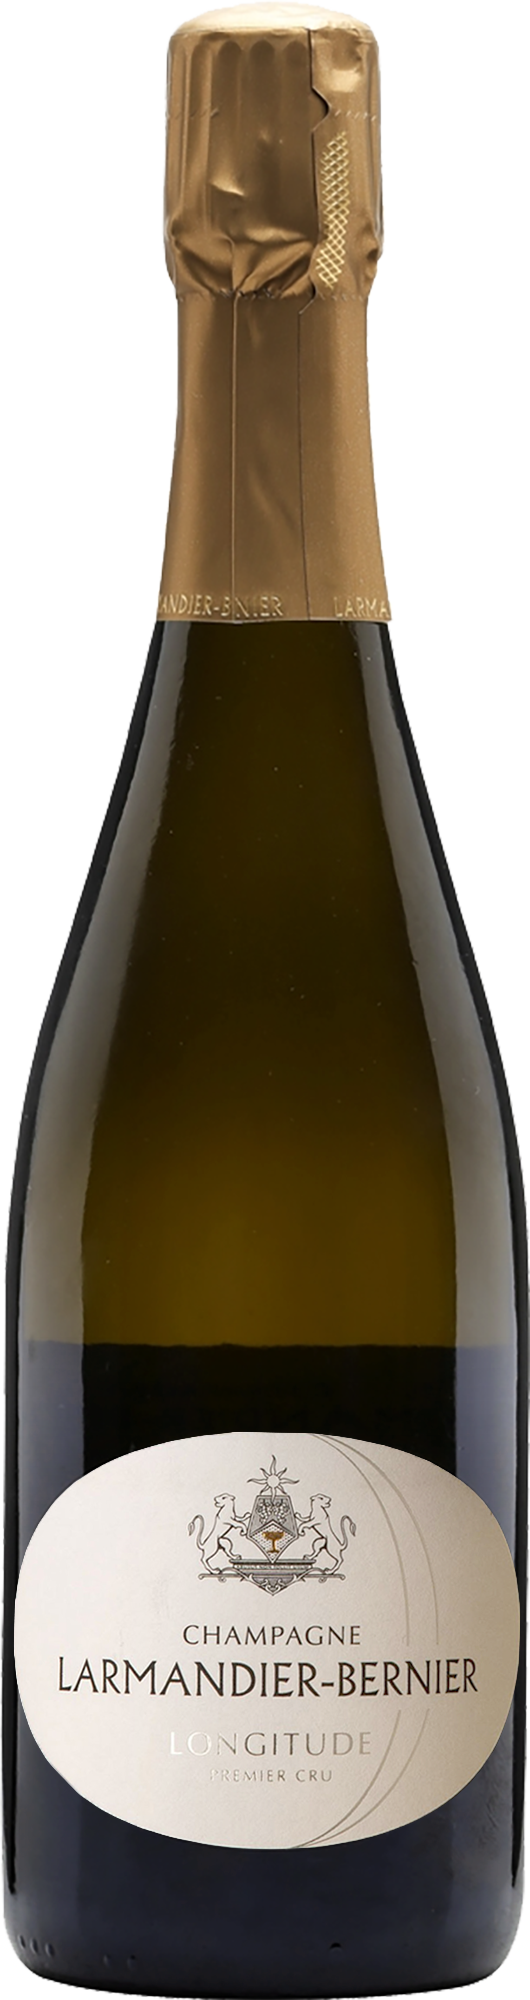 Champagne Larmandier-Bernier 1er Cru Longitude Blanc de Blancs NV (Base 17 Disg. Oct 2020)